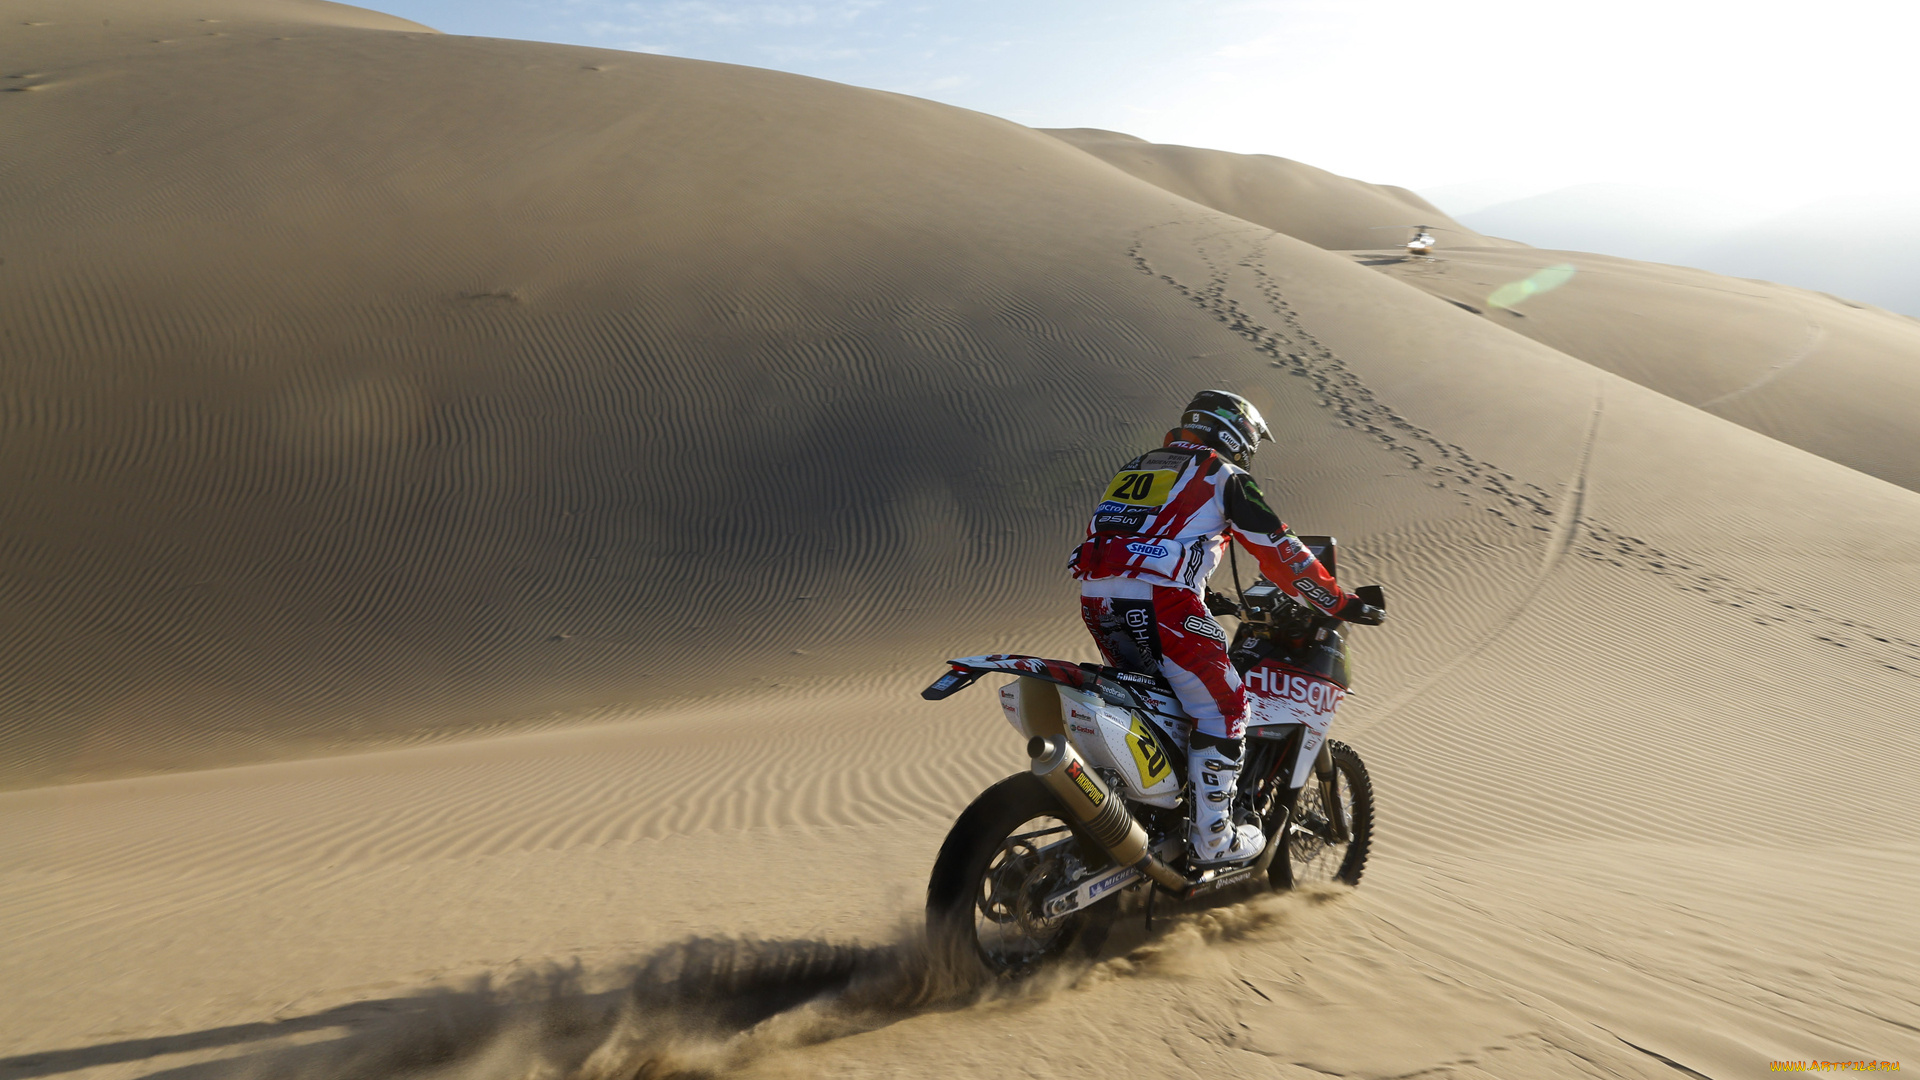 спорт, мотокросс, мотоцикл, гонщик, dakar, песок, дюны, 20, солнце, дакар, ралли